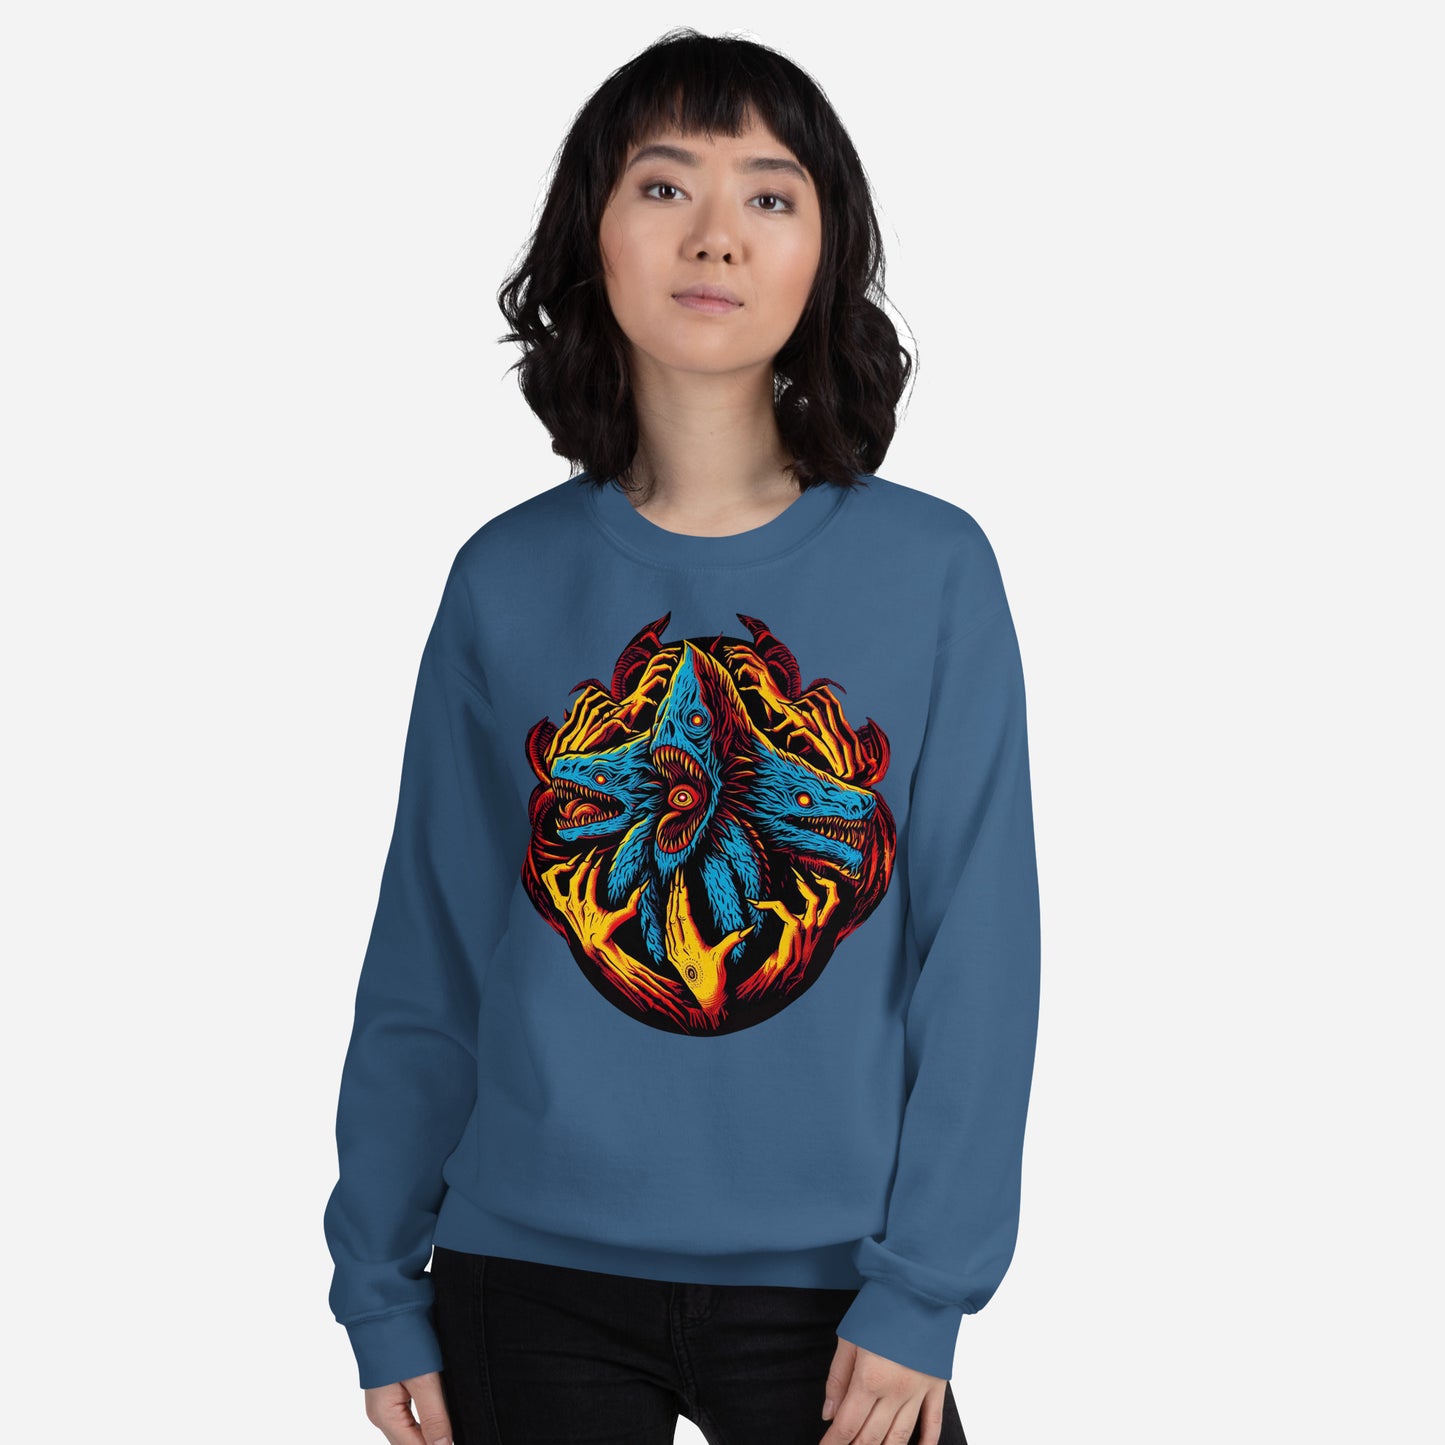 "folly" unisex sweatshirt